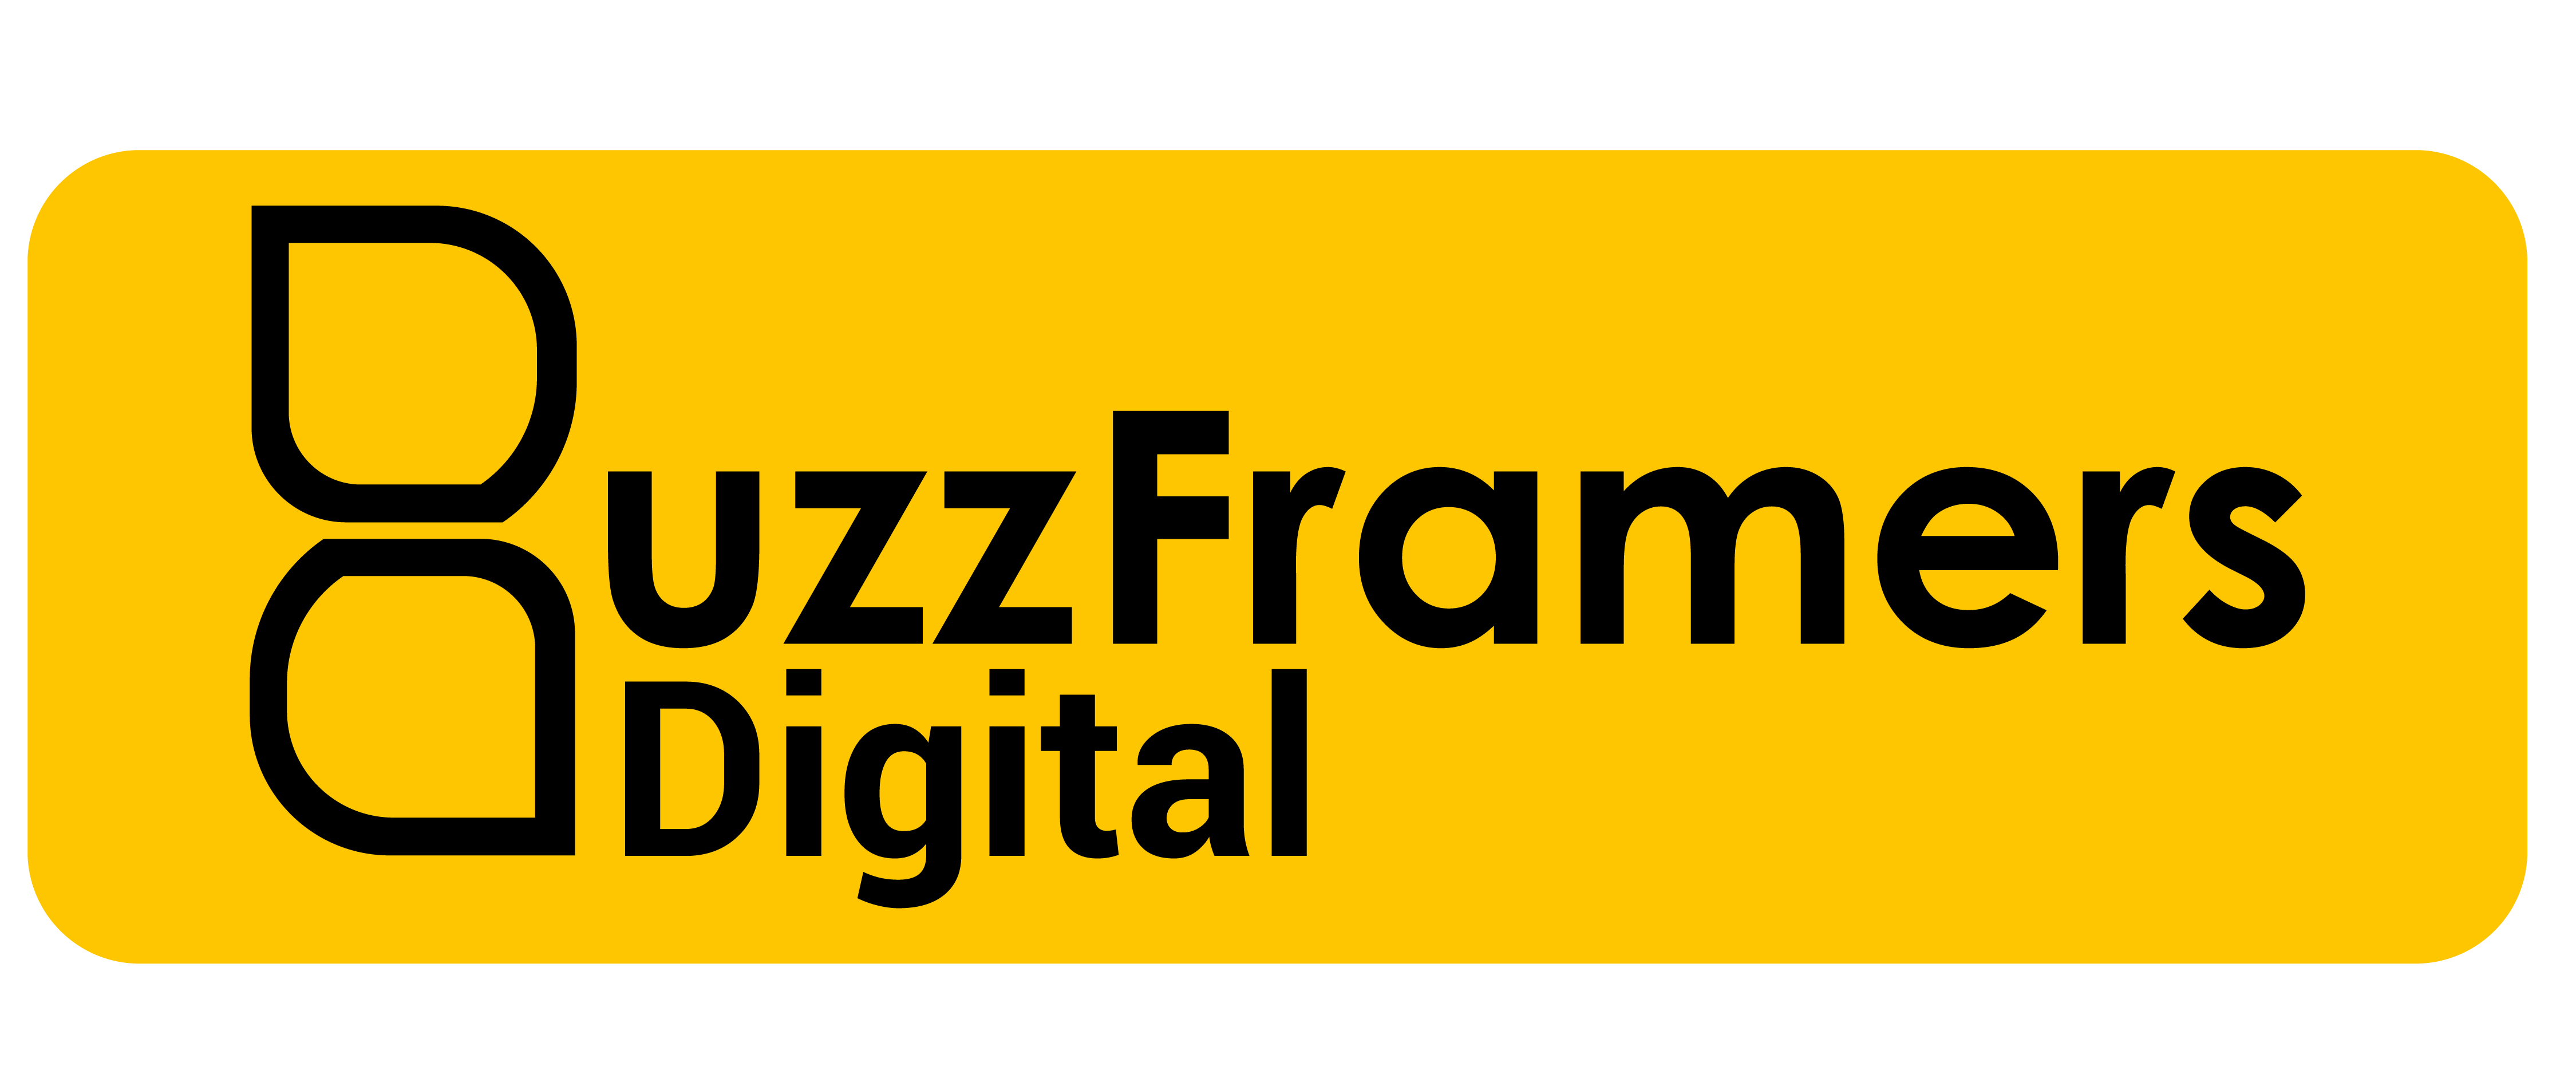 Buzz Framers Digital